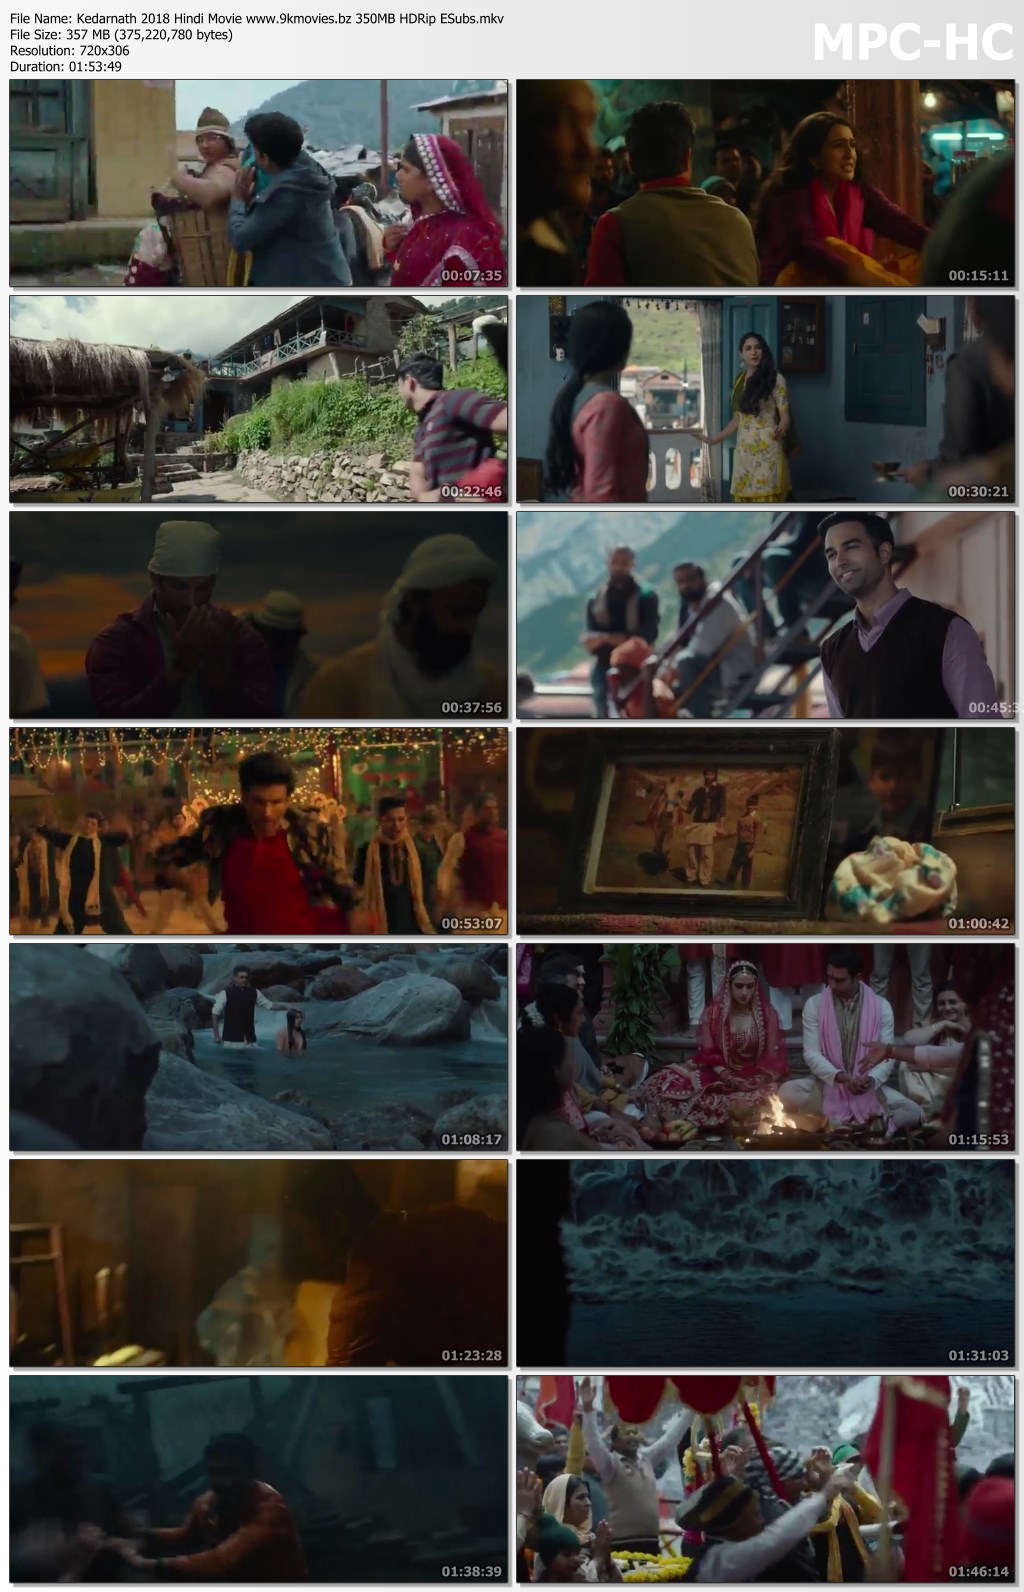 kedarnath movie download 720p